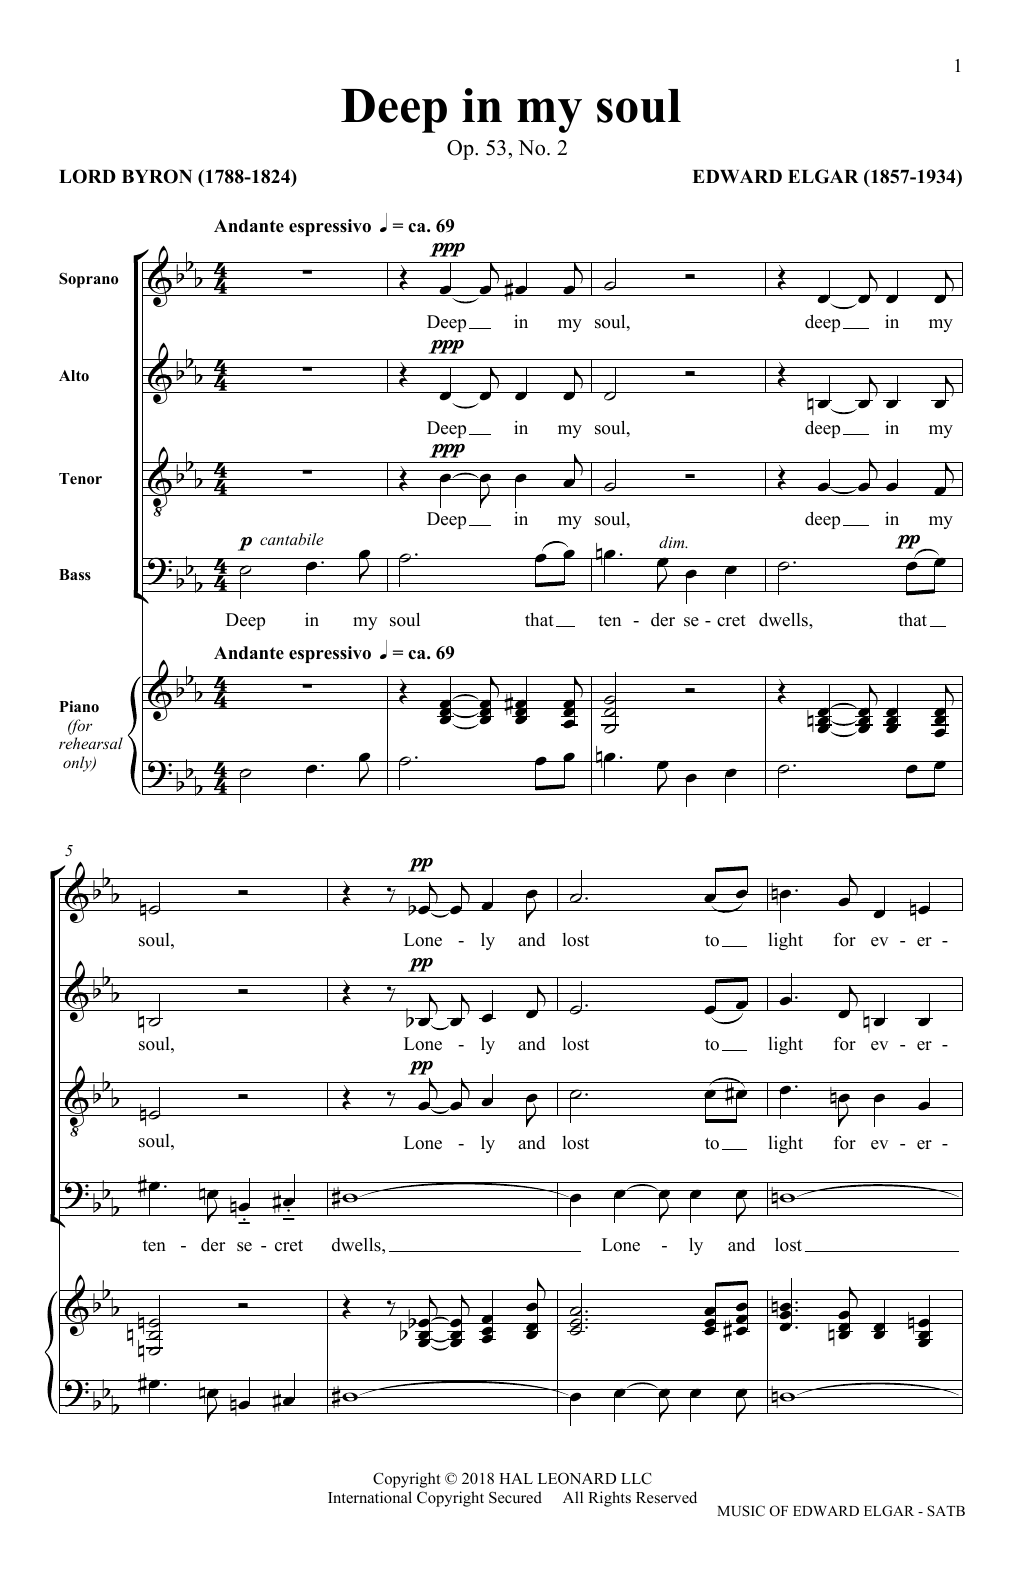 Edward Elgar Deep In My Soul (arr. Philip Lawson) Sheet Music Notes & Chords for SATB Choir - Download or Print PDF